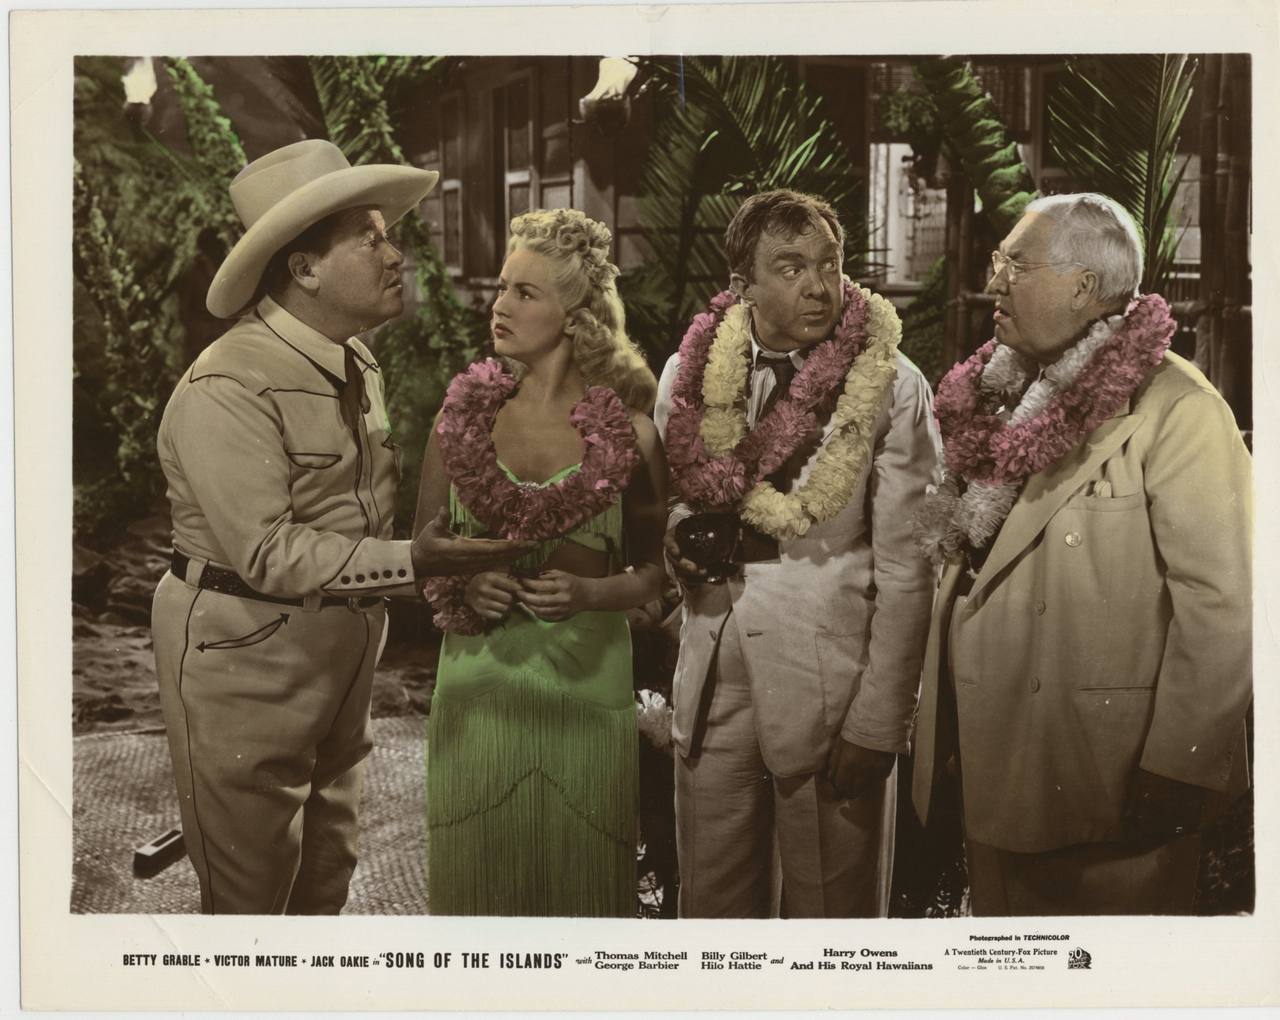 Betty Grable در صحنه فیلم سینمایی Song of the Islands به همراه George Barbier، Jack Oakie و توماس میچل